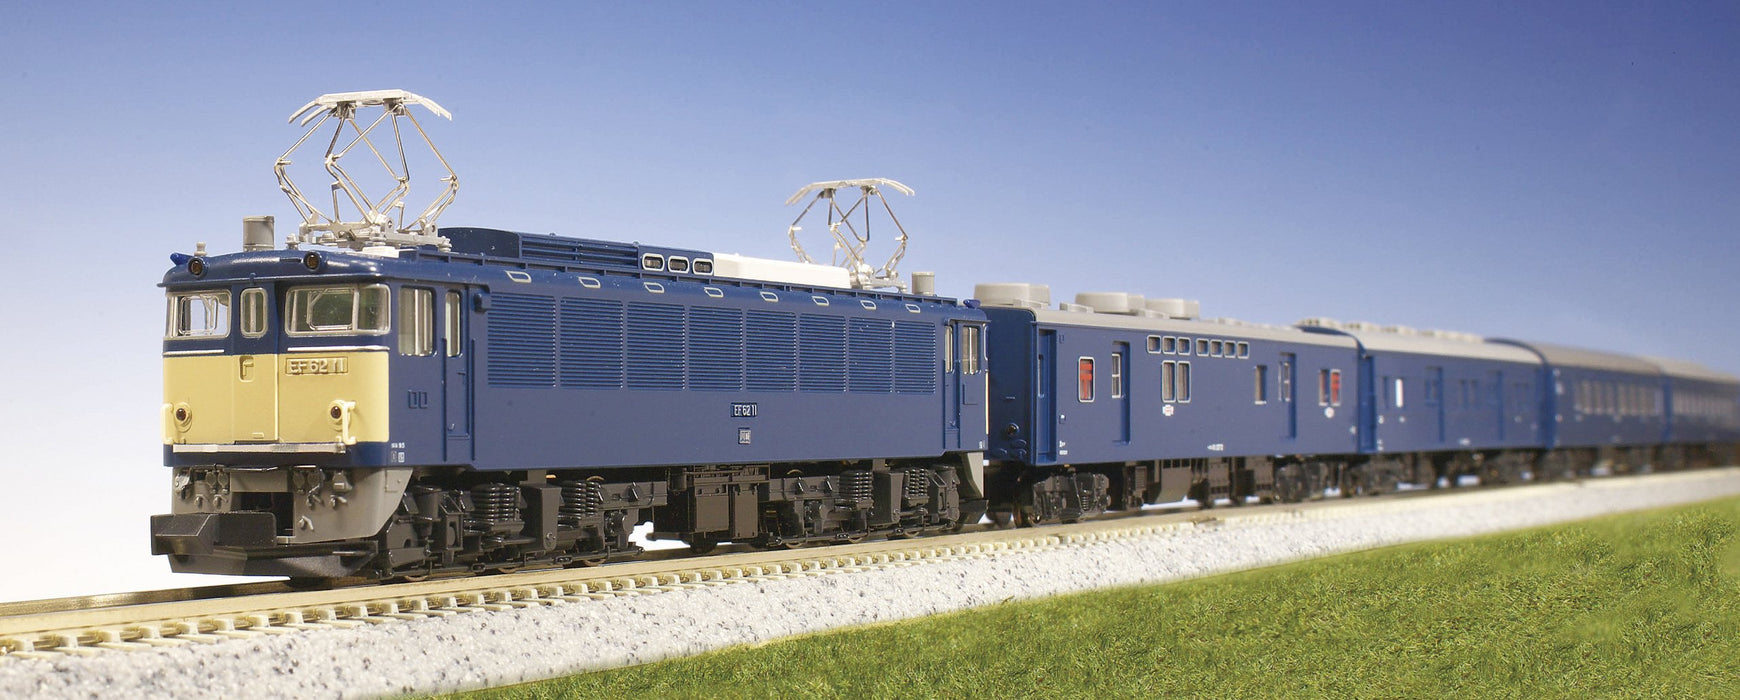 Kato N Gauge 10 Series Myoko Basic 6-Car Express Sleeper Set Railway Model